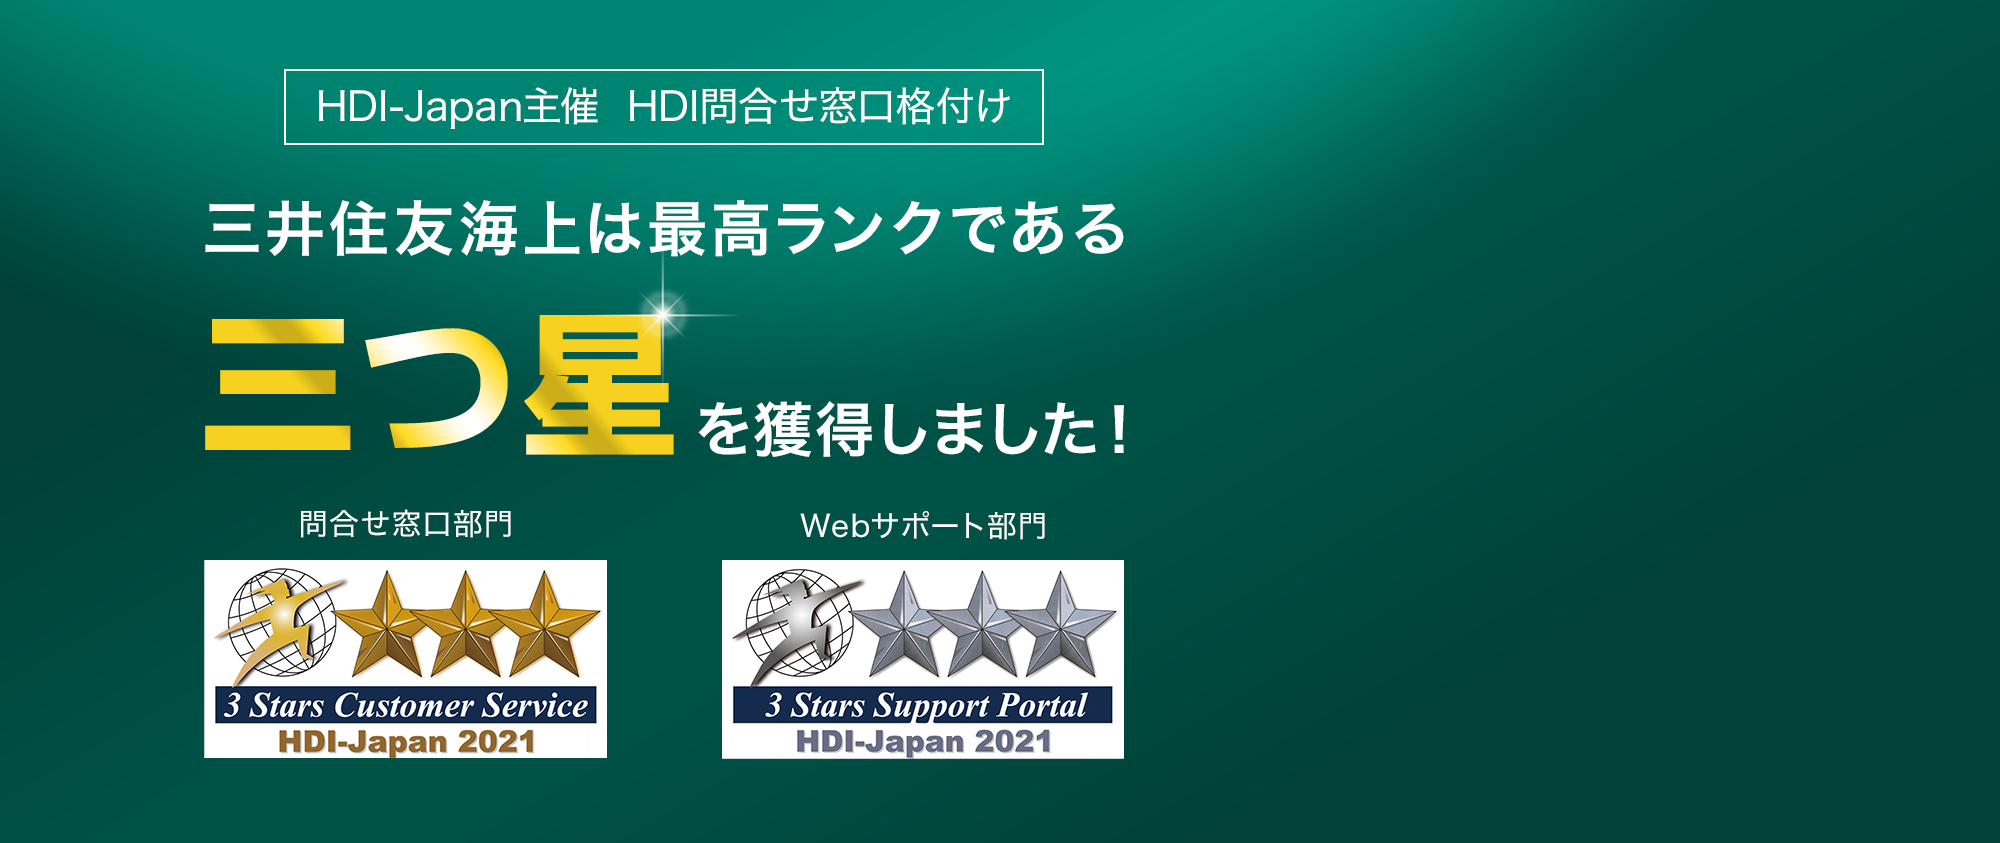 HDI-Japan主催 HDI問合せ窓口格付け 三井住友海上は最高ランクである「三つ星」を獲得しました！